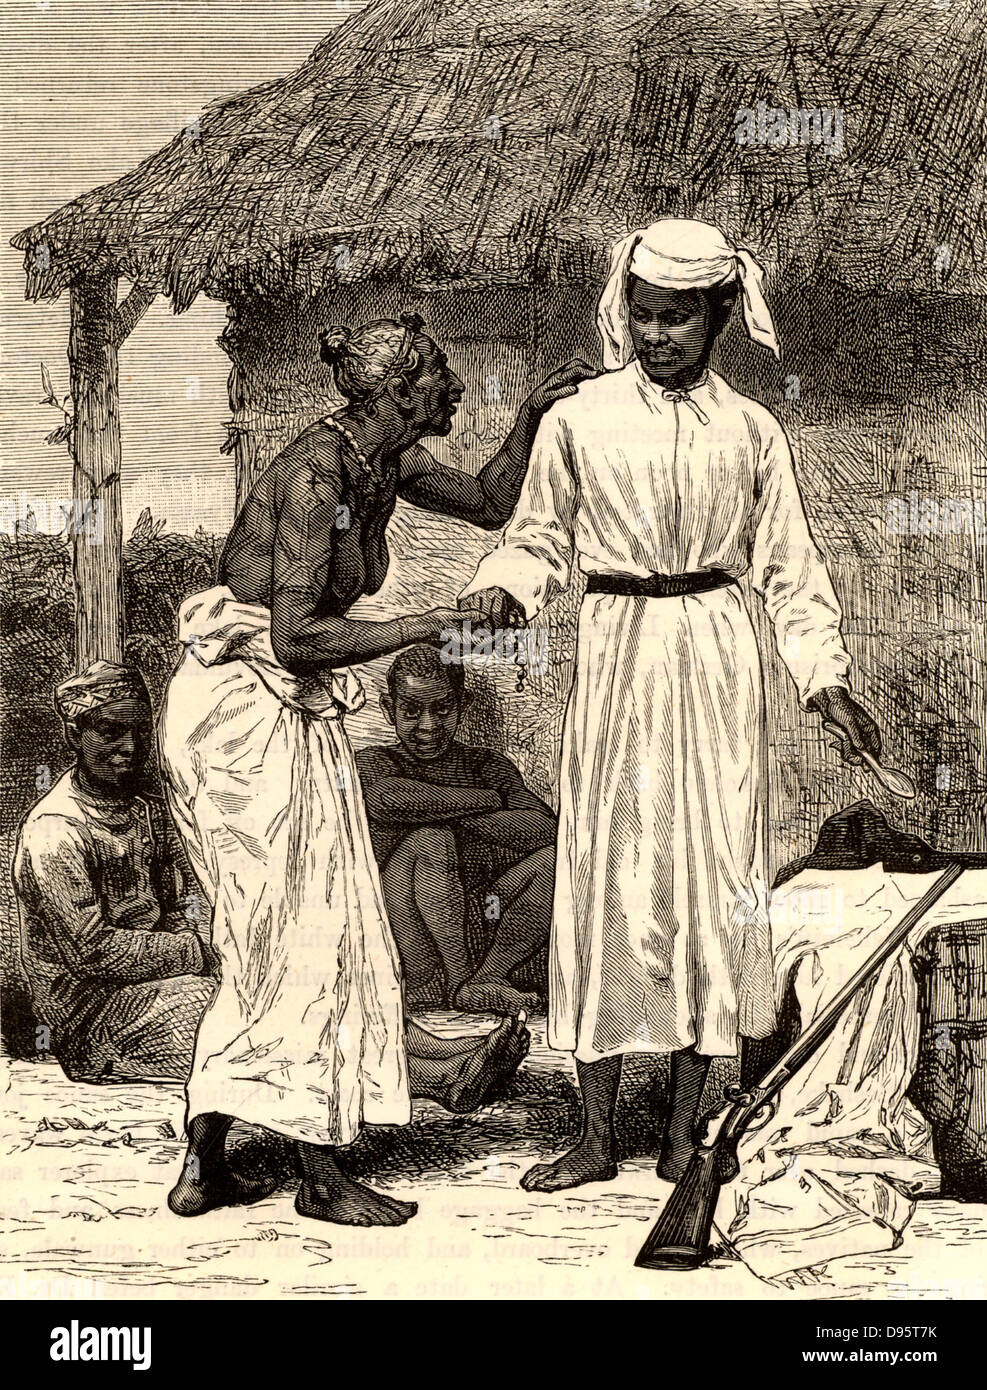 chumah-the-servant-of-david-livingstone-1813-1873-scottish-missionary-D95T7K.jpg